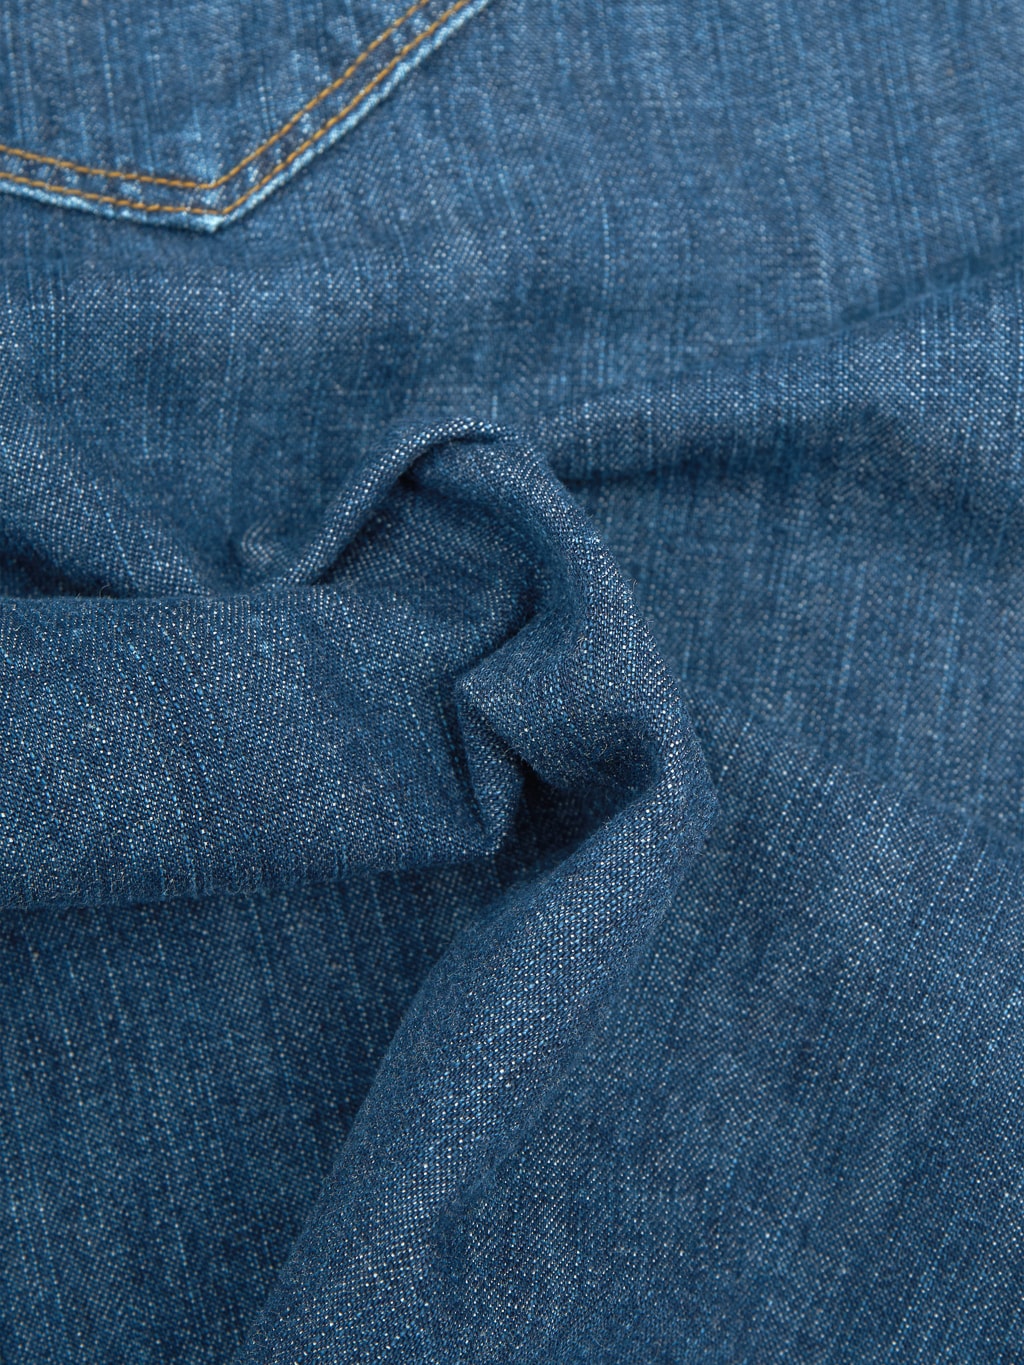 Stevenson overall cody shirt faded indigo denim fabric texture